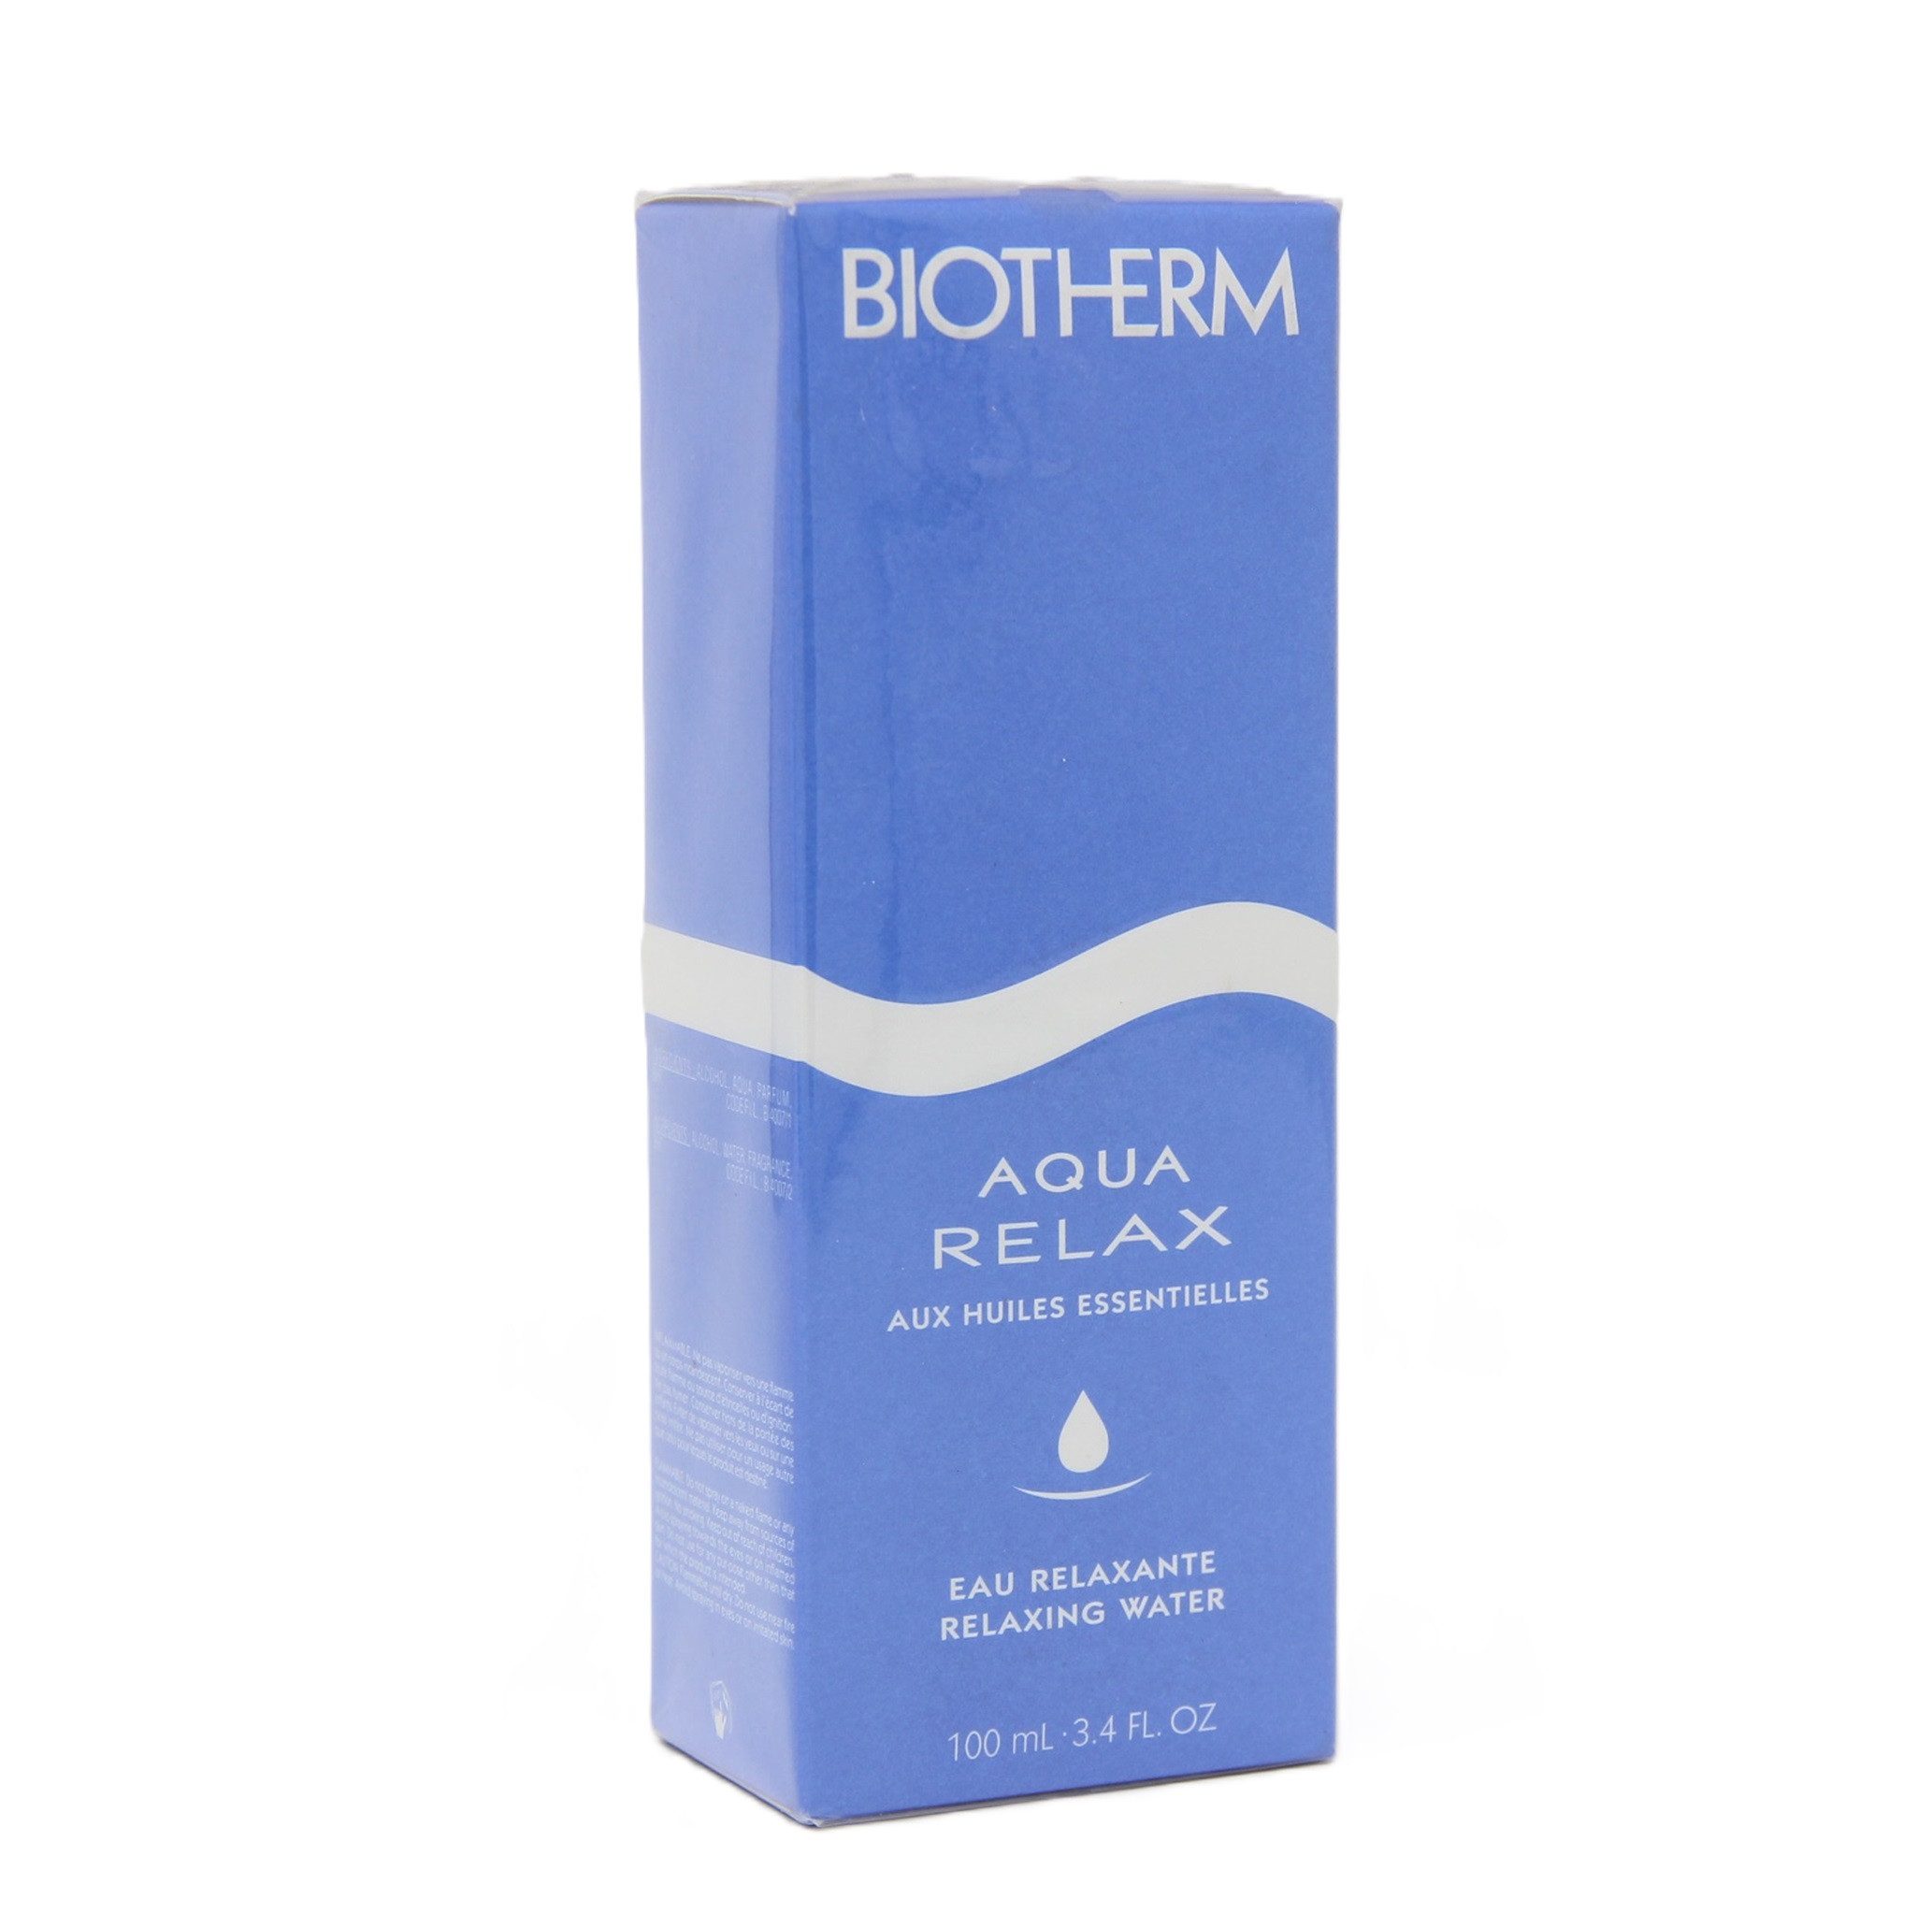 BIOTHERM Eau de Toilette Biotherm Aqua Relax essential oils relaxing water 100ml